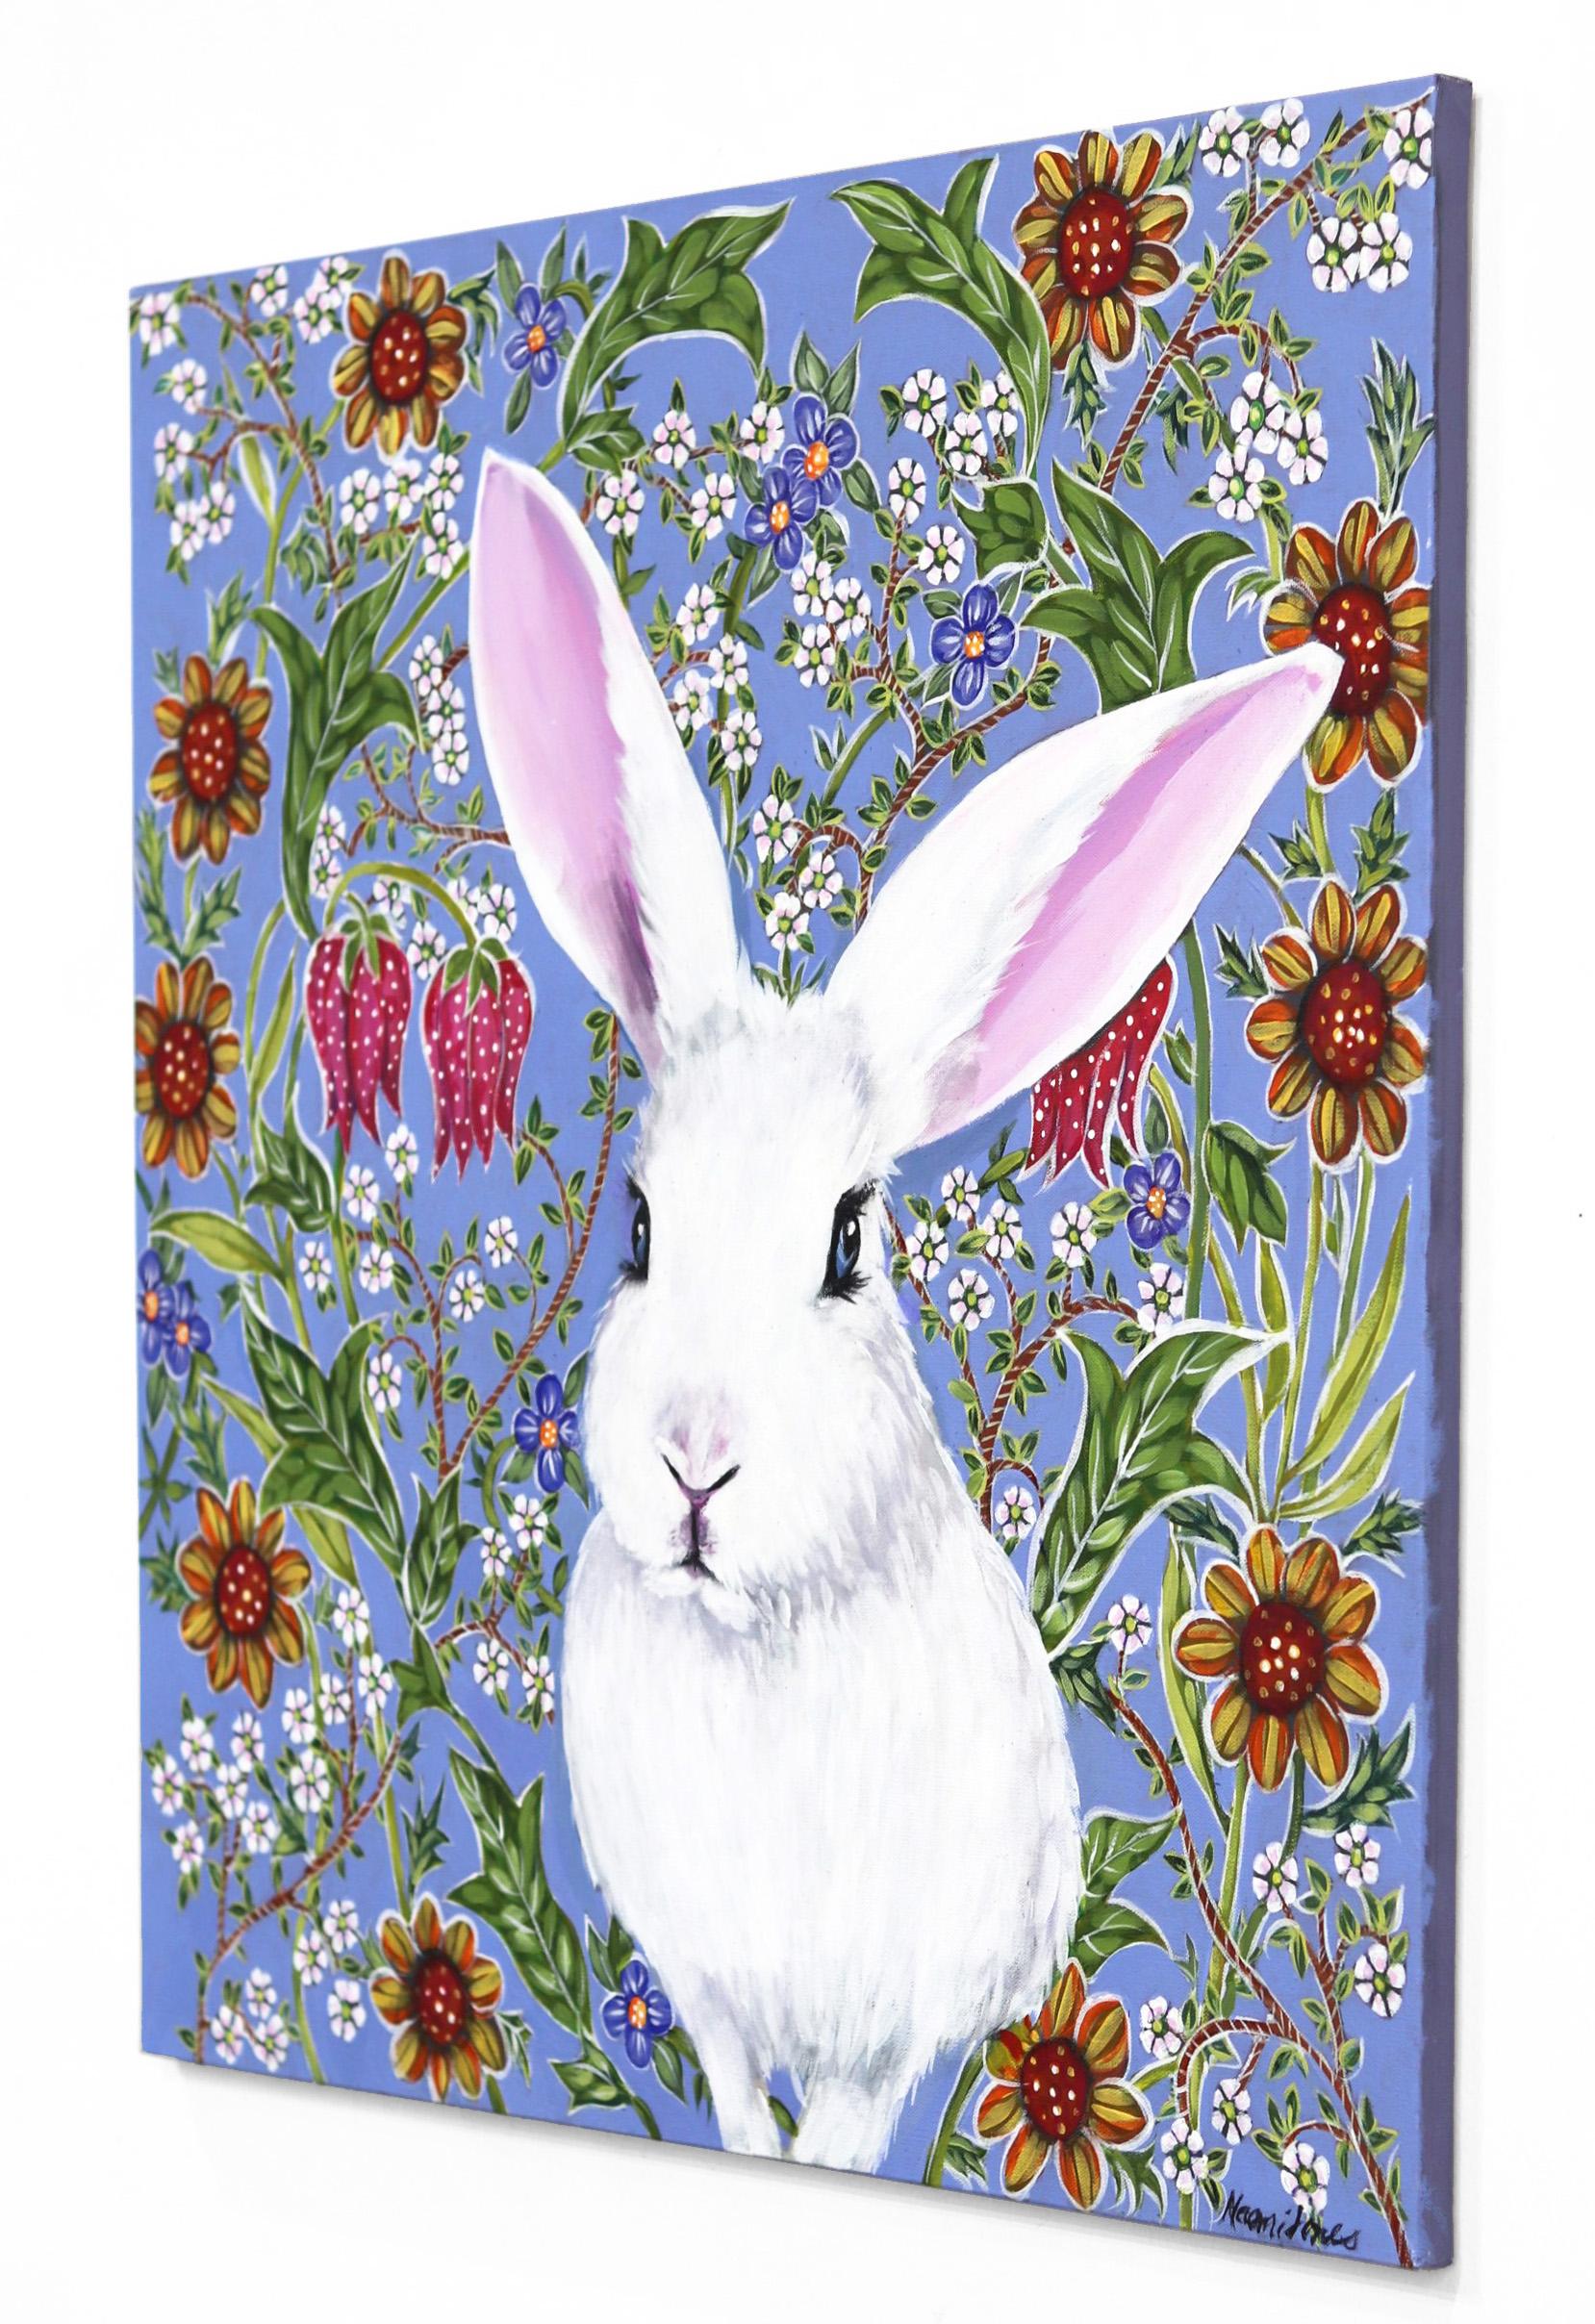 Sweet White Rabbit  - Original Vivid Figurative Animal Painting on Canvas For Sale 3